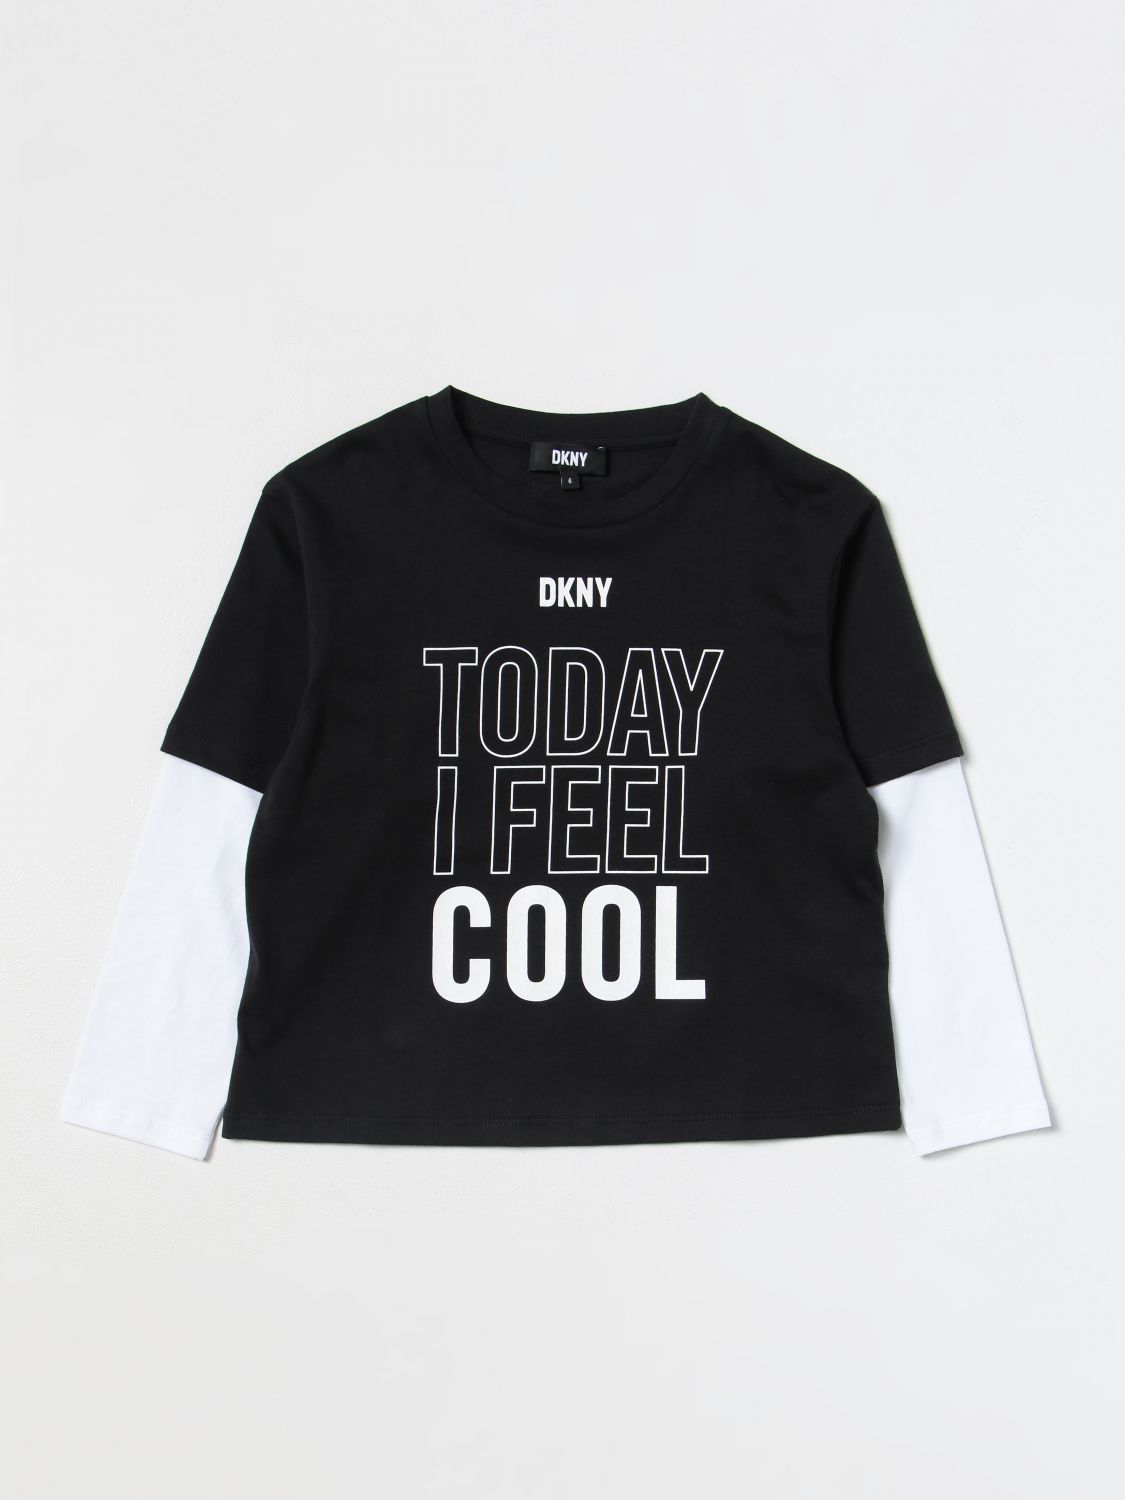 Dkny T-shirt  Kids Color Black